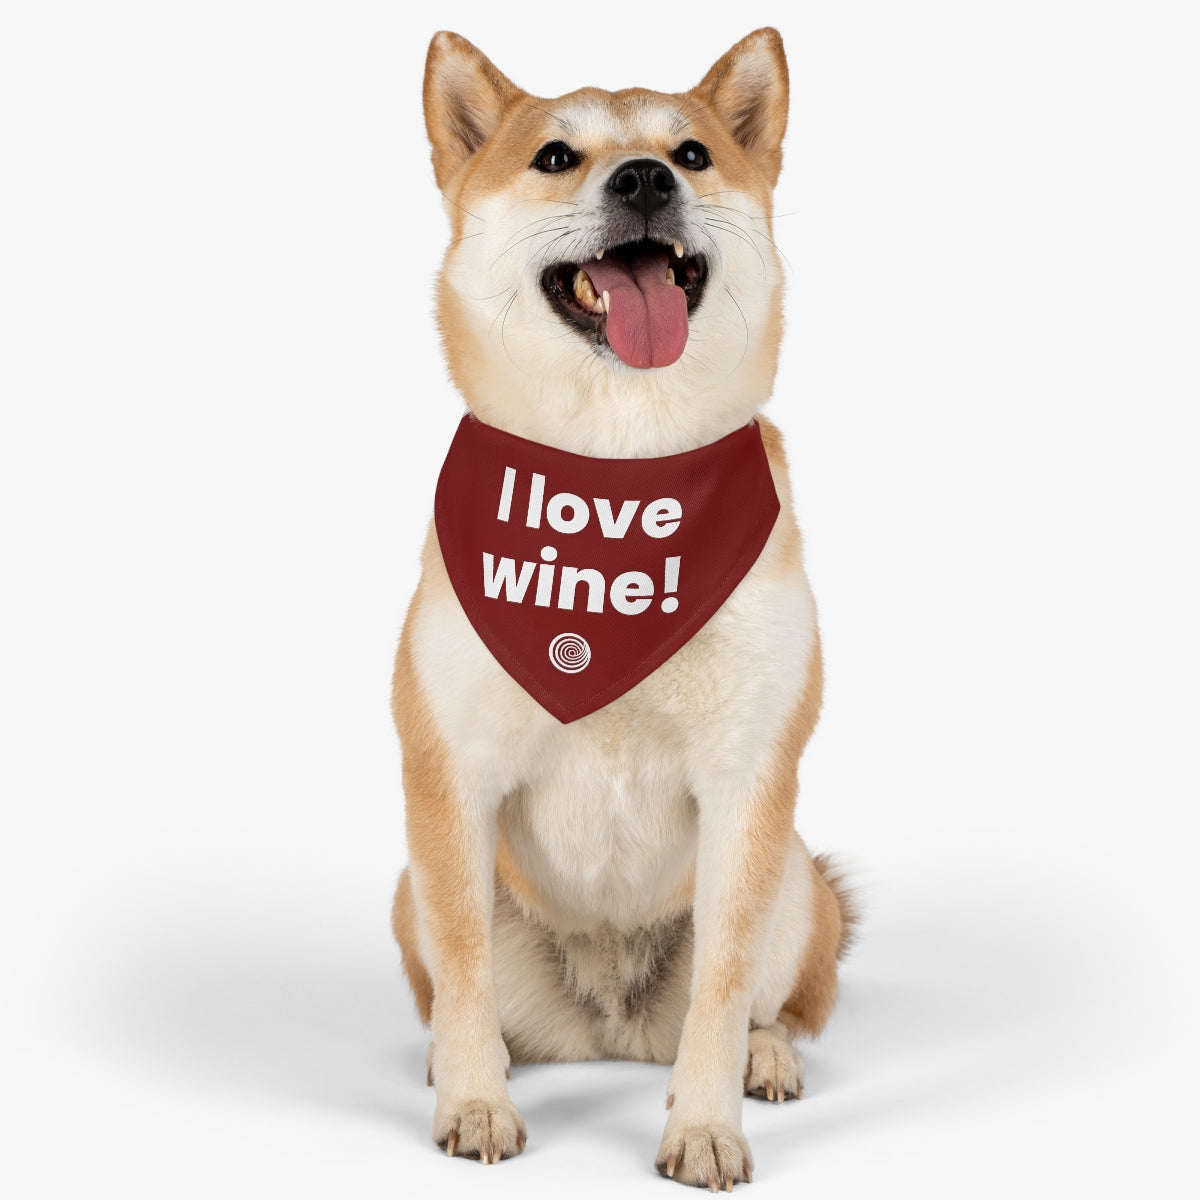 "I Love Wine!" Bandana